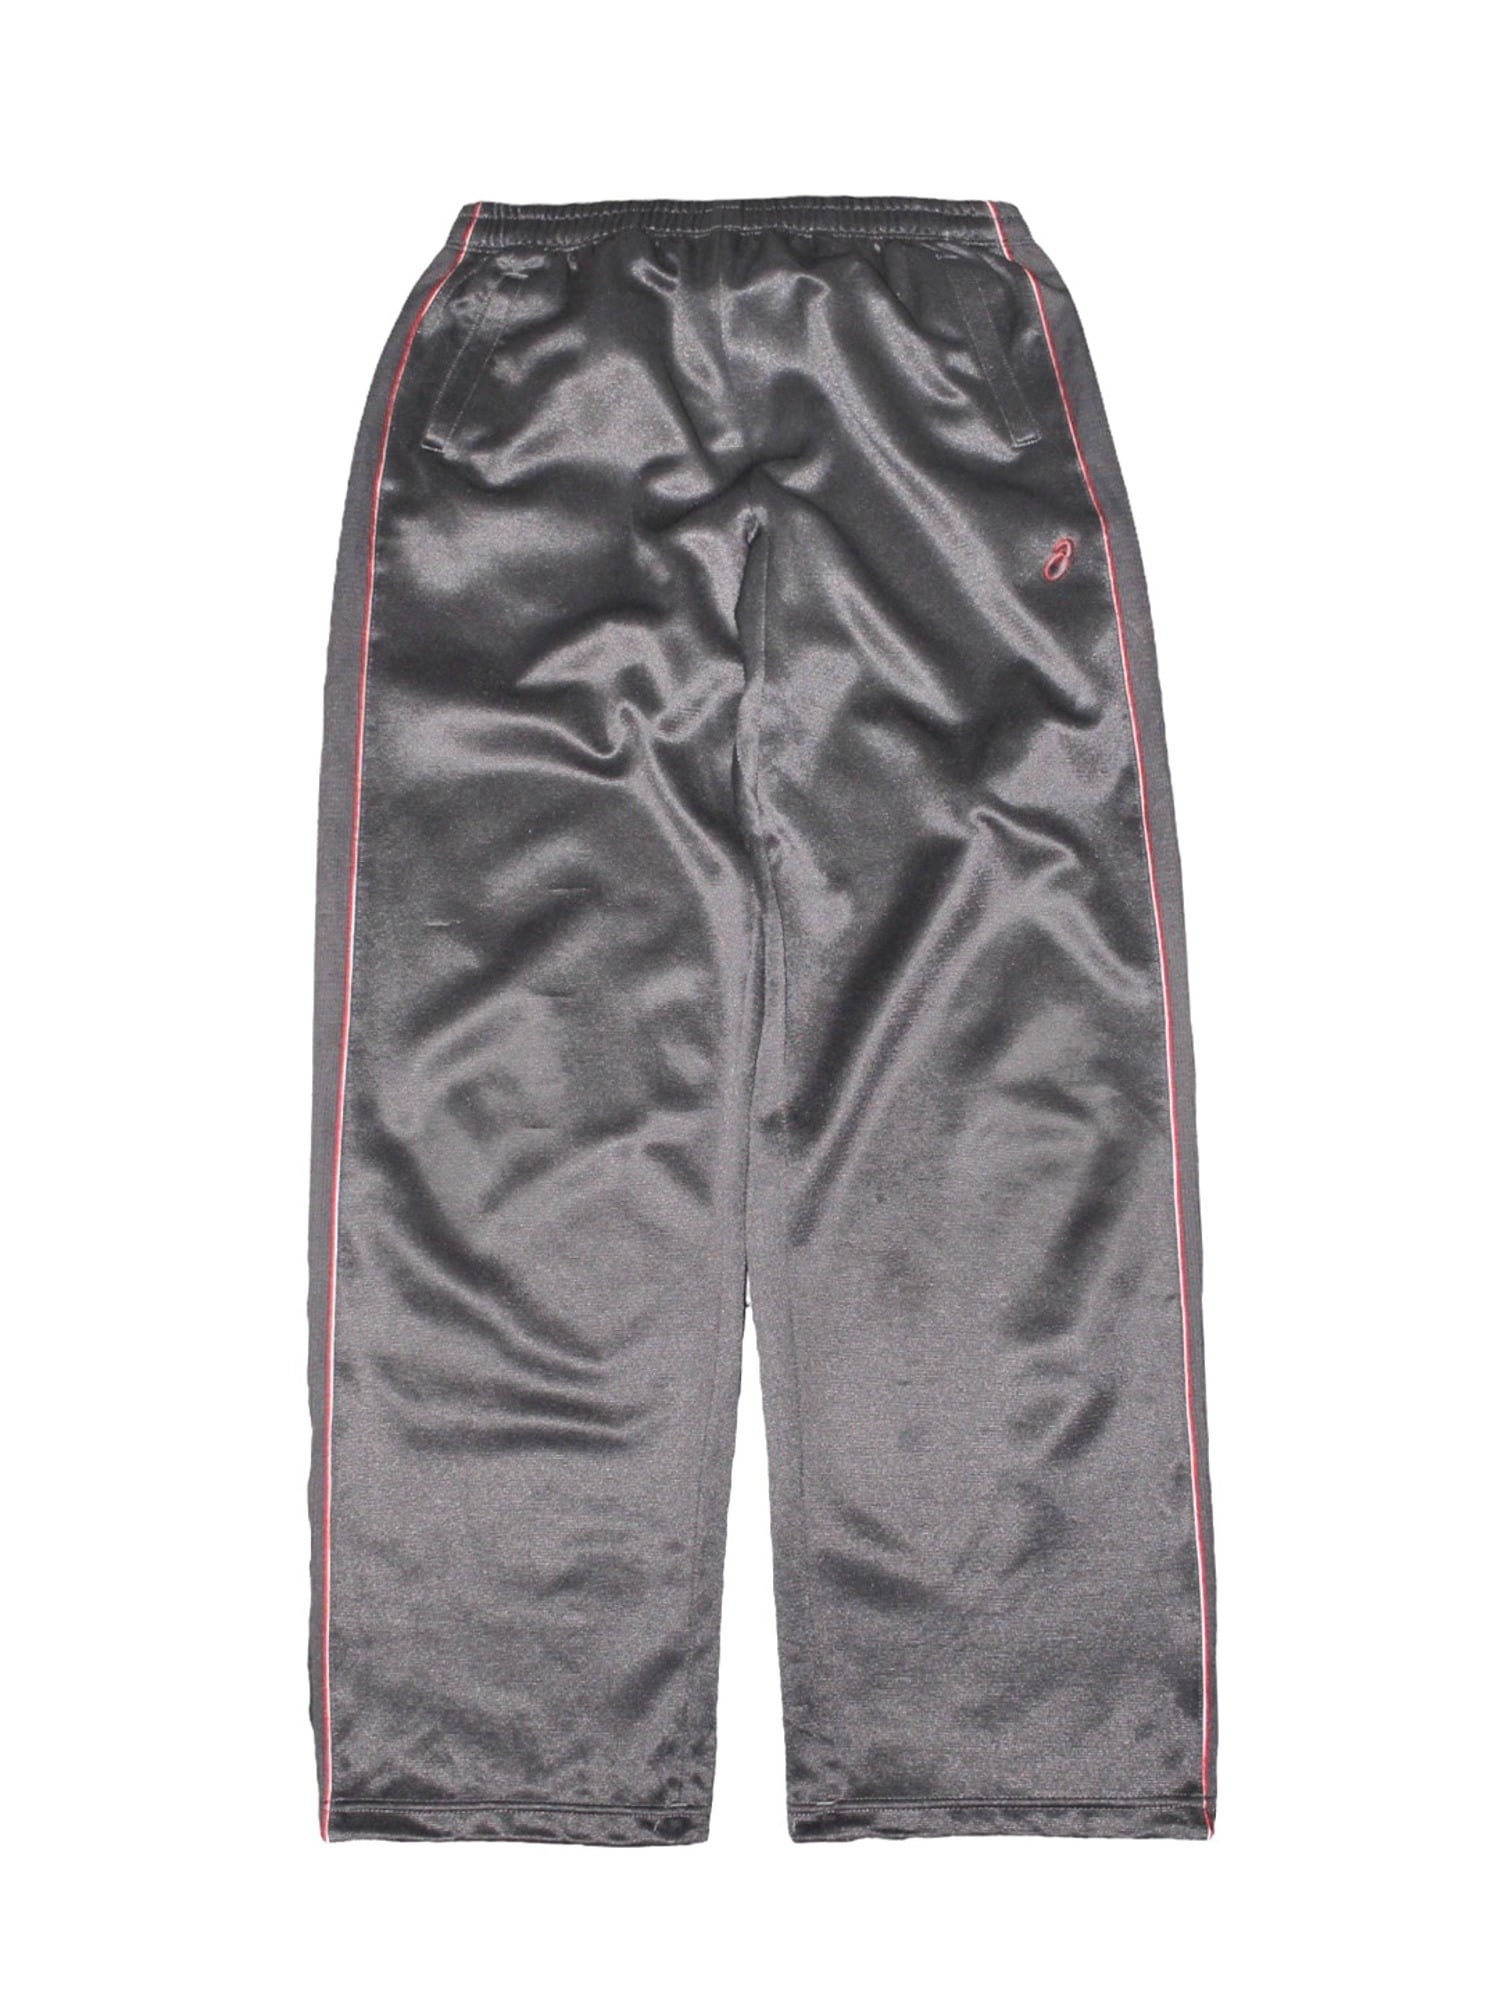 Asics Track Pants (Grey)